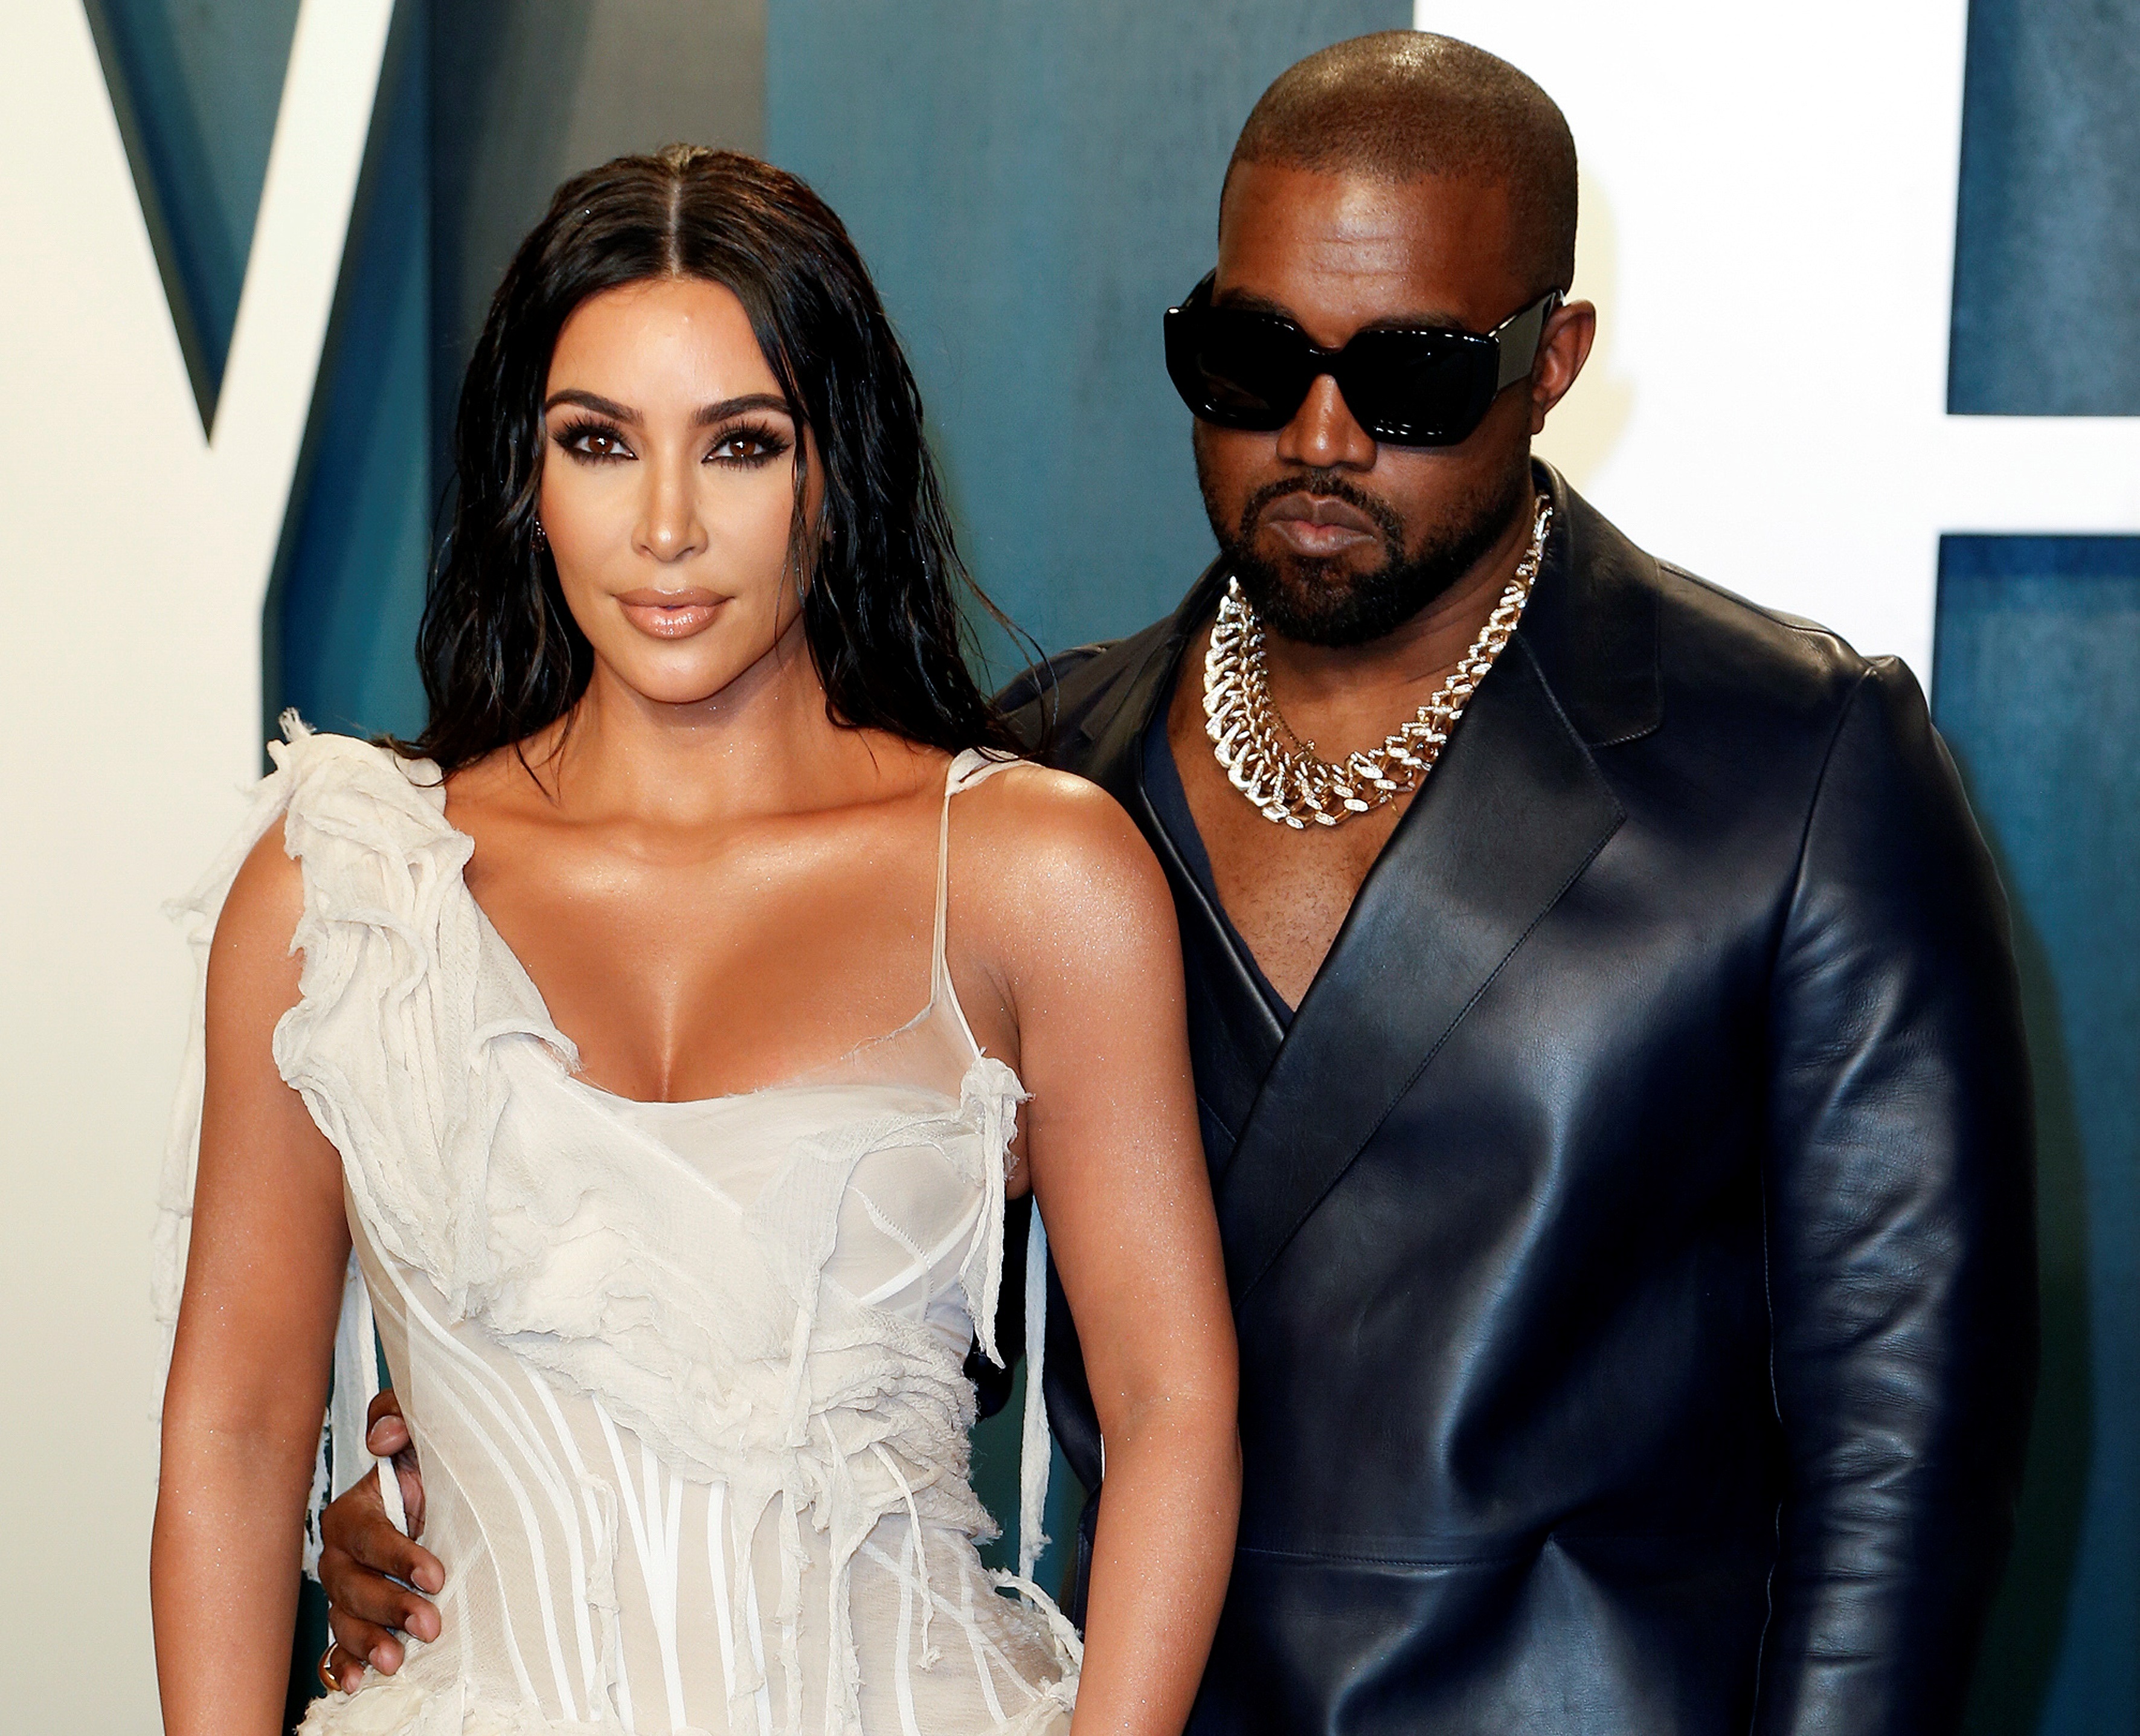 ELa estrella televisiva Kim Kardashian y su marido, el rapero Kanye West. FE/EPA/RINGO CHIU/Archivo
